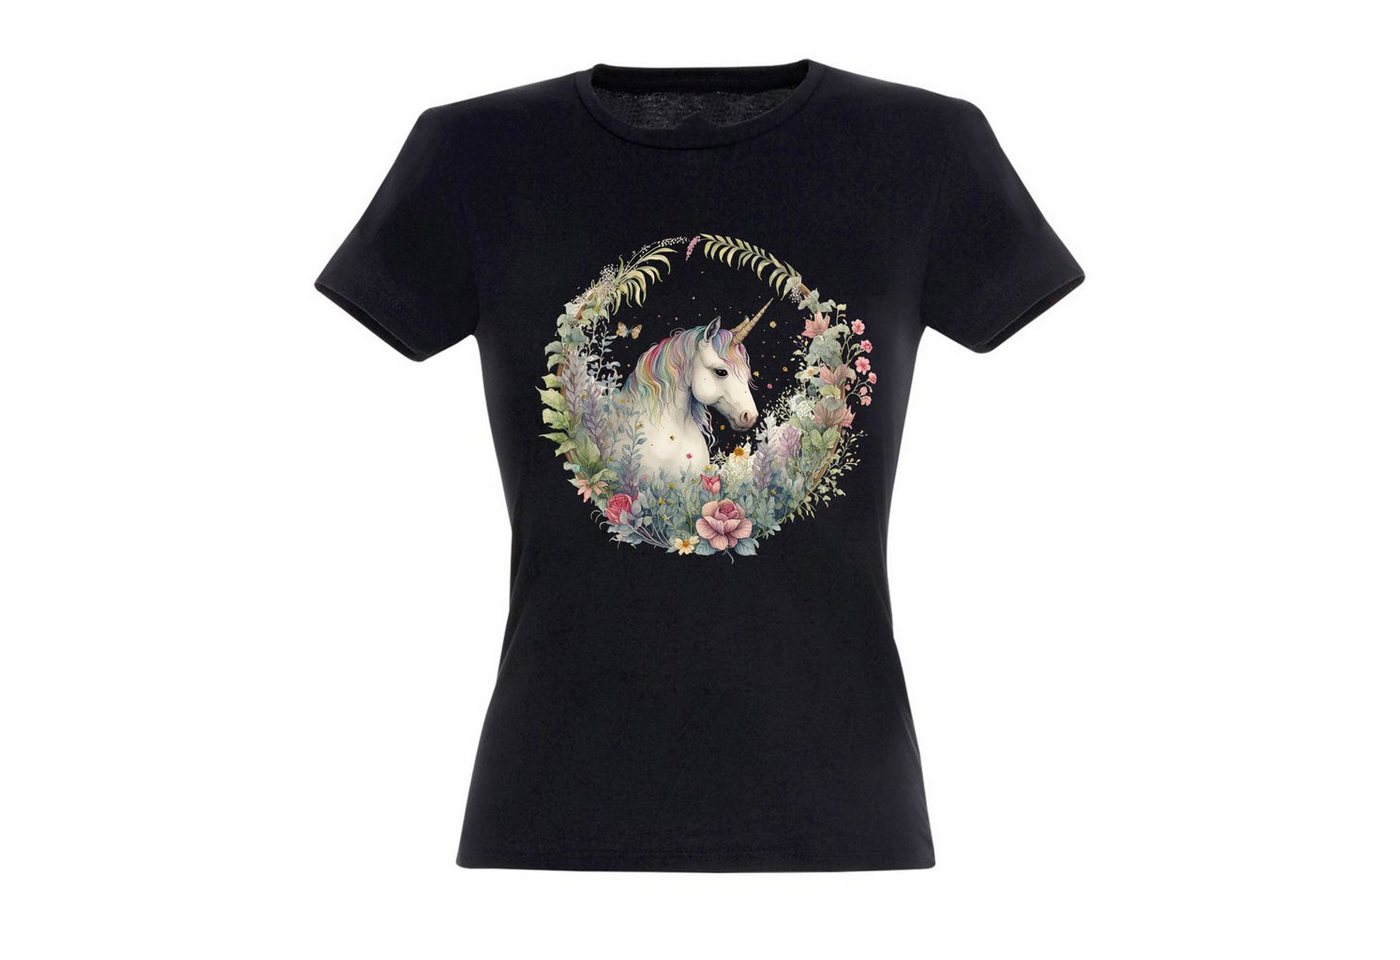 Banco T-Shirt Banco Unicorn T-Shirt mit Unicorn im Kranz Druck Damen Sommermode von Banco